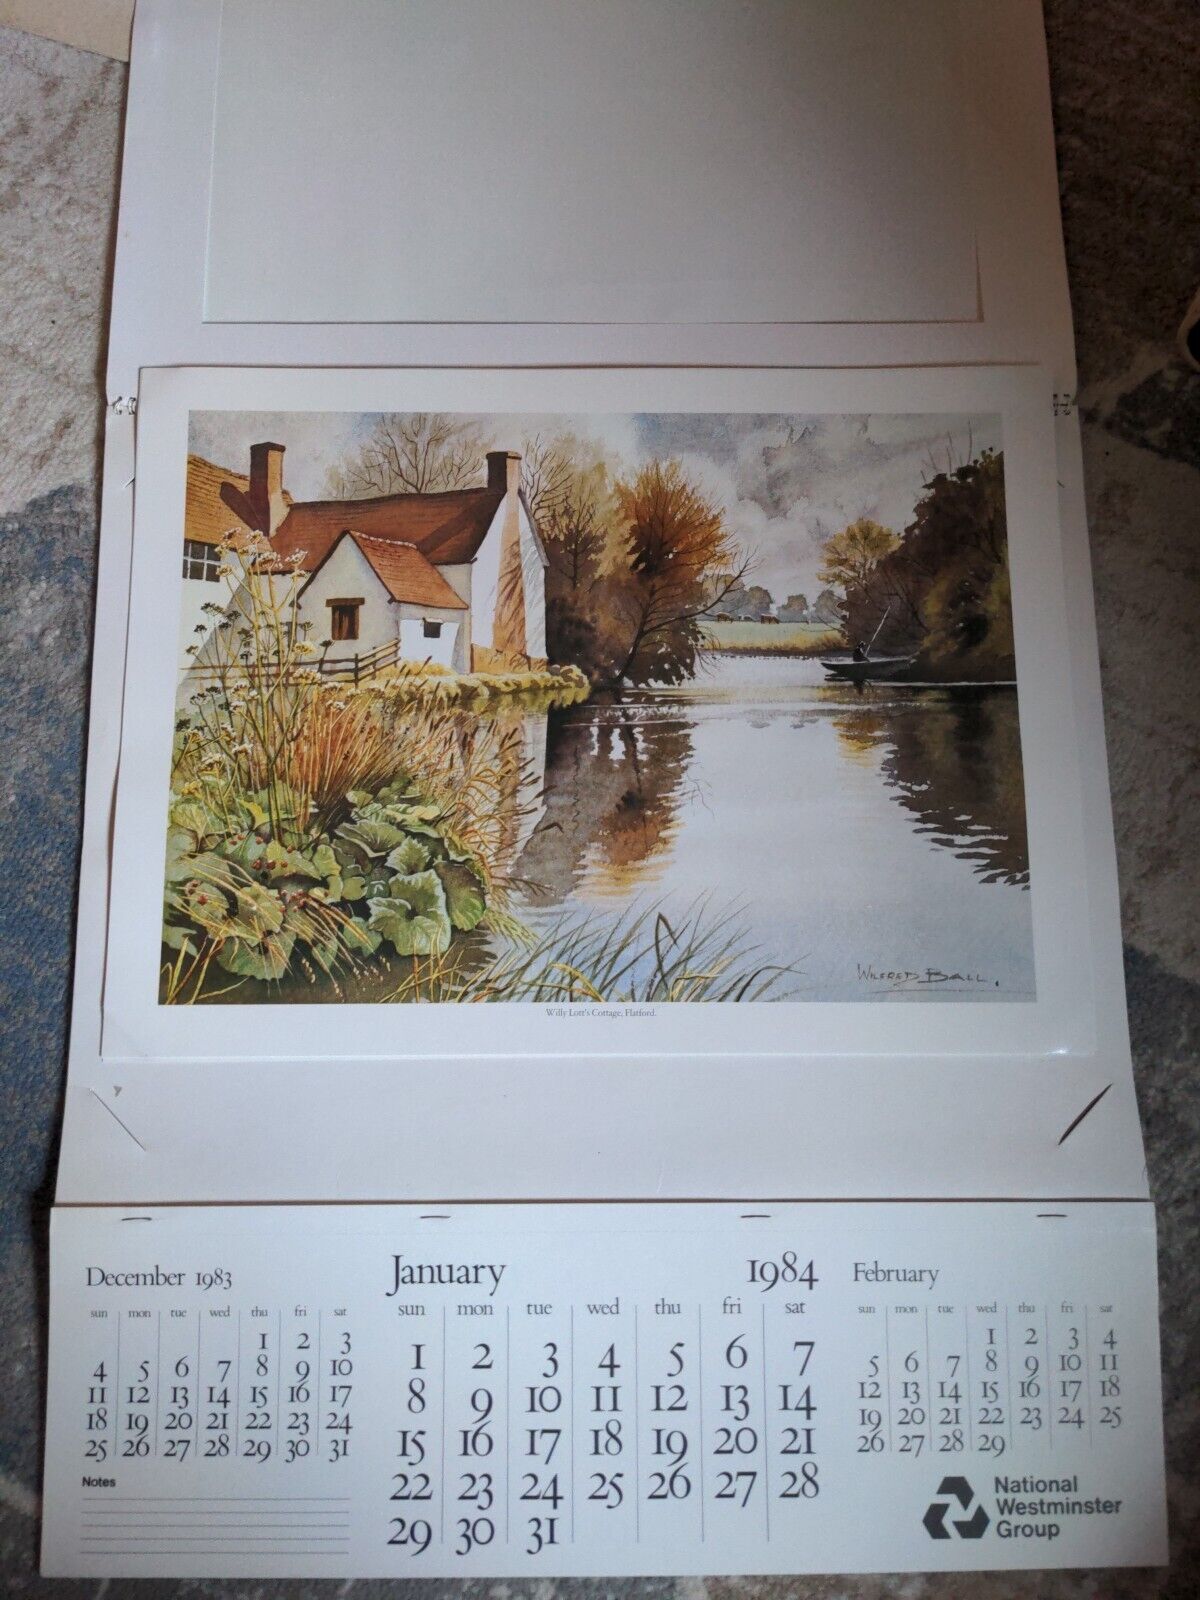 1984 Vintage Calendar National Westminster Bank 6 Prints Of Wilfred Ball 